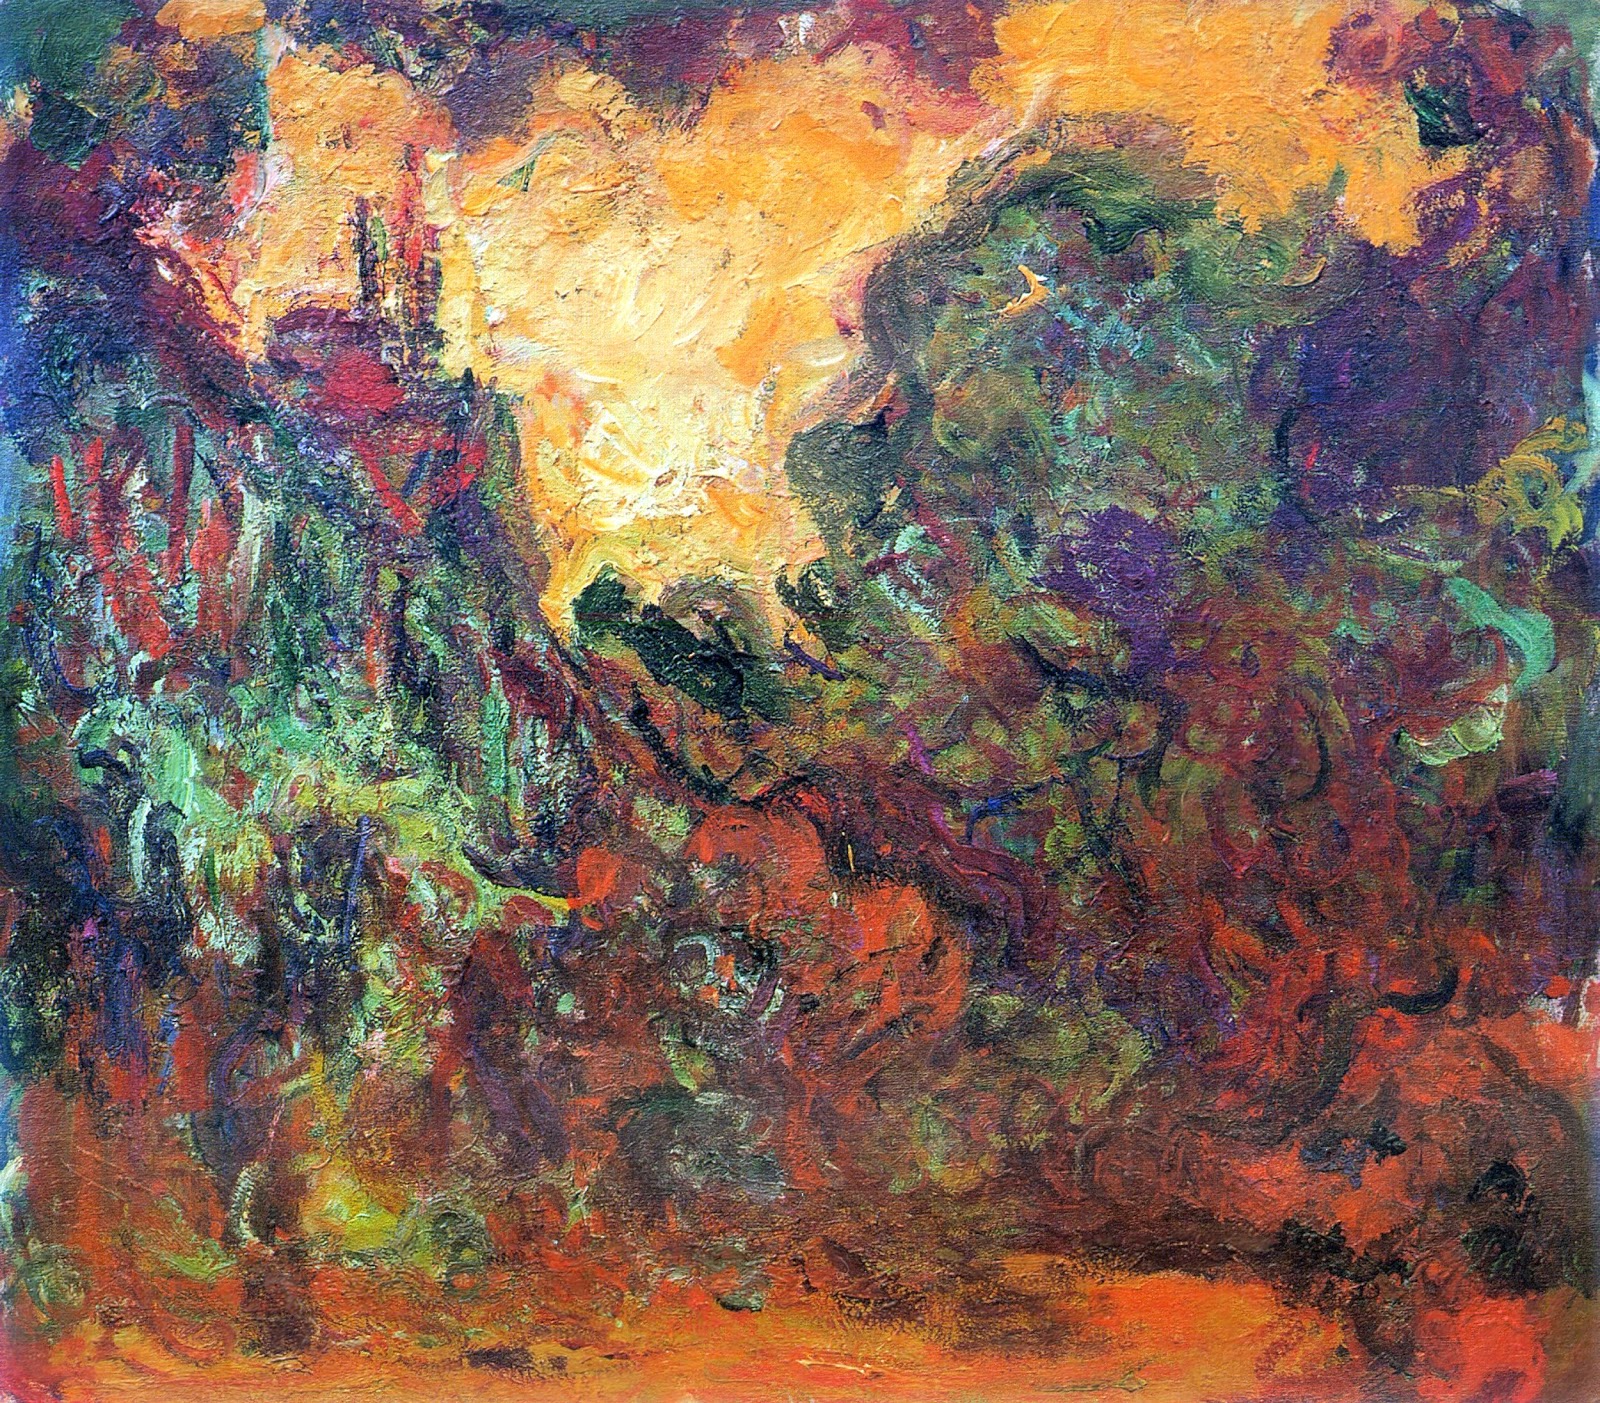 Claude+Monet-1840-1926 (723).jpg